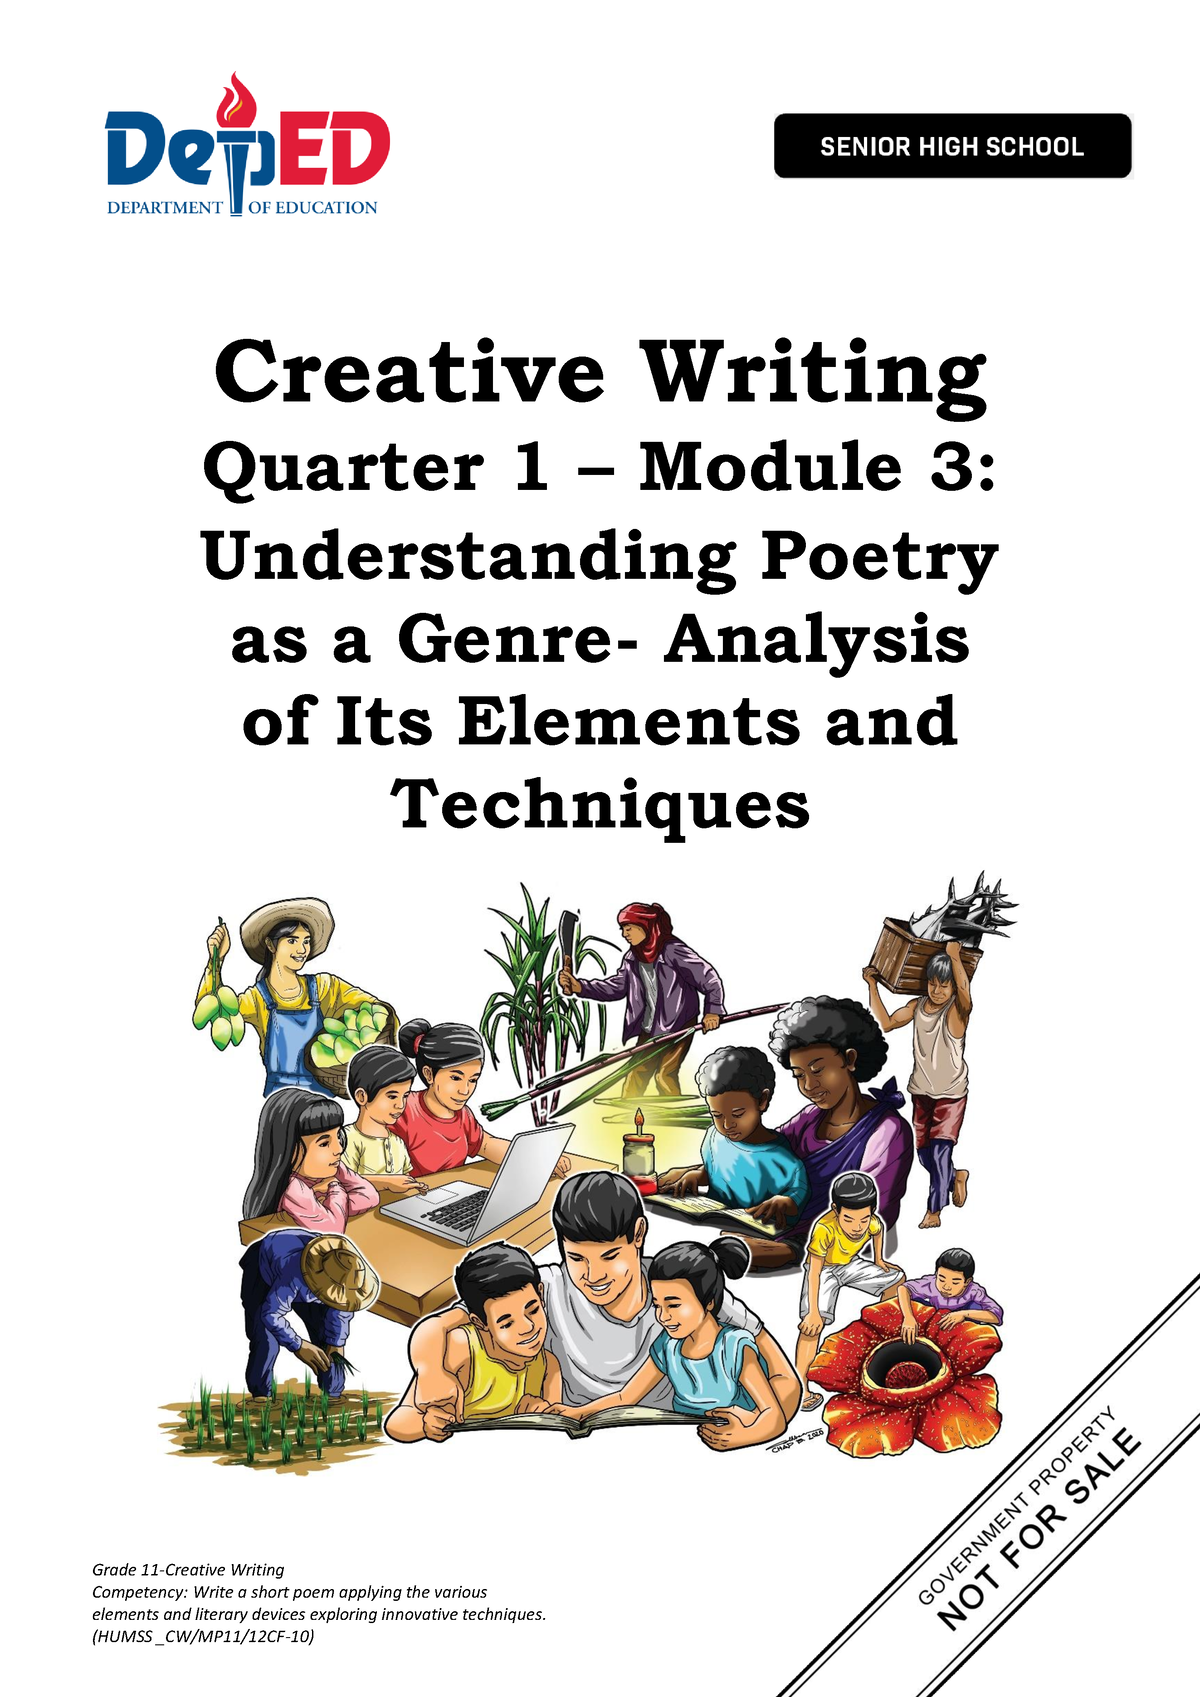 grade 11 creative writing module 3 answer key